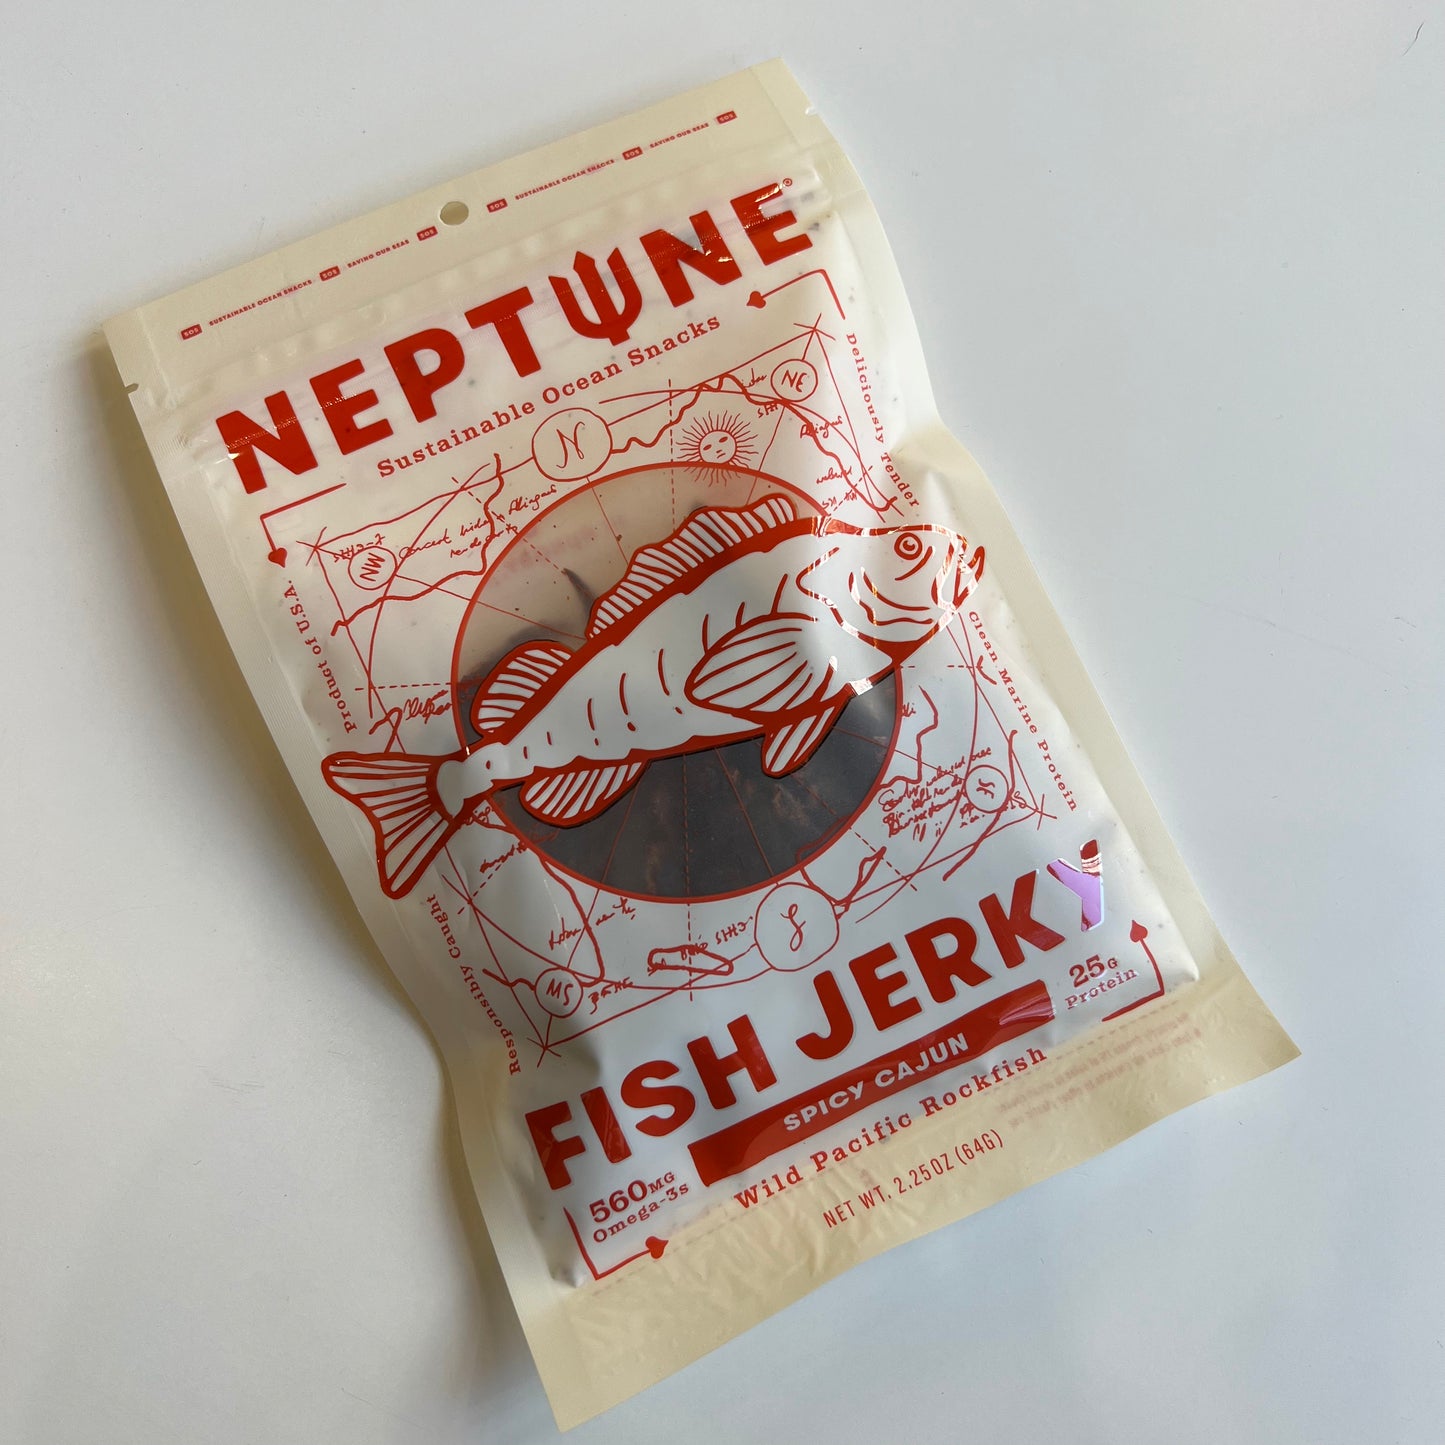 Neptune - fish Jerky Spicy Cajun